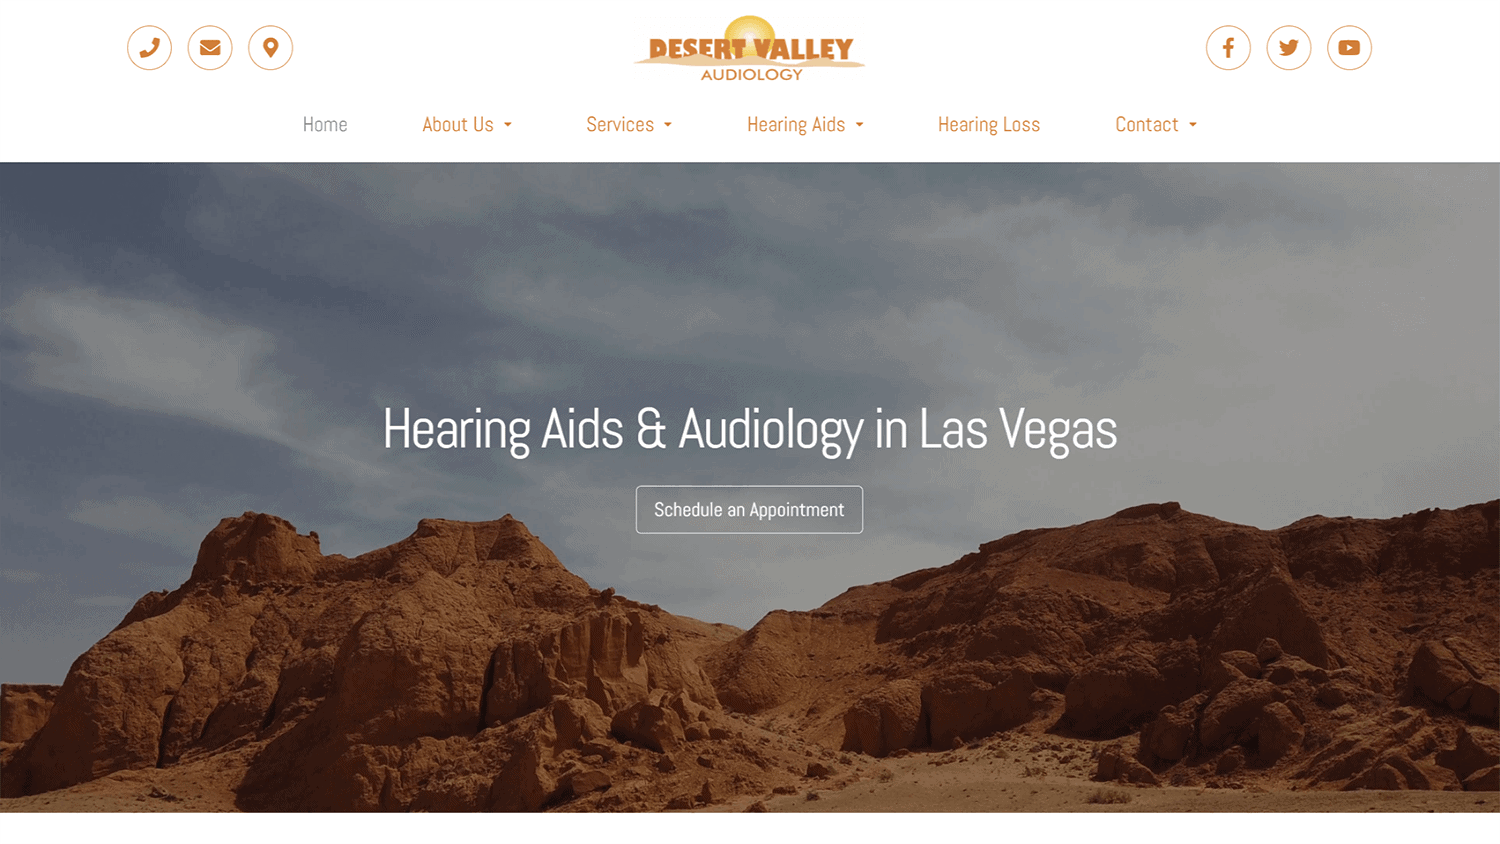 Desert Valley Audiology Hearing Aids & Audiology in Las Vegas